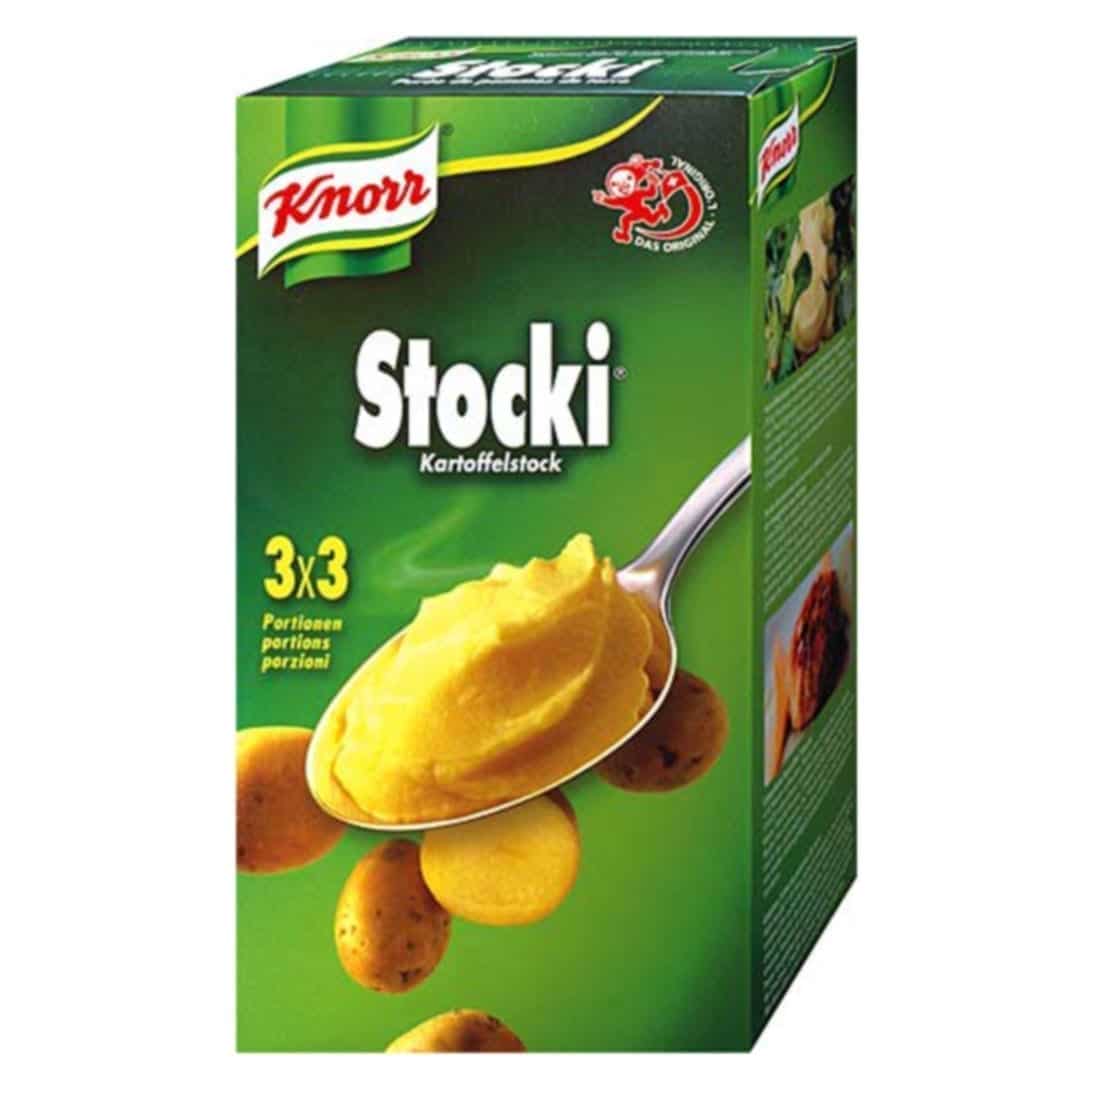 stocki-knorr-mashed-potato